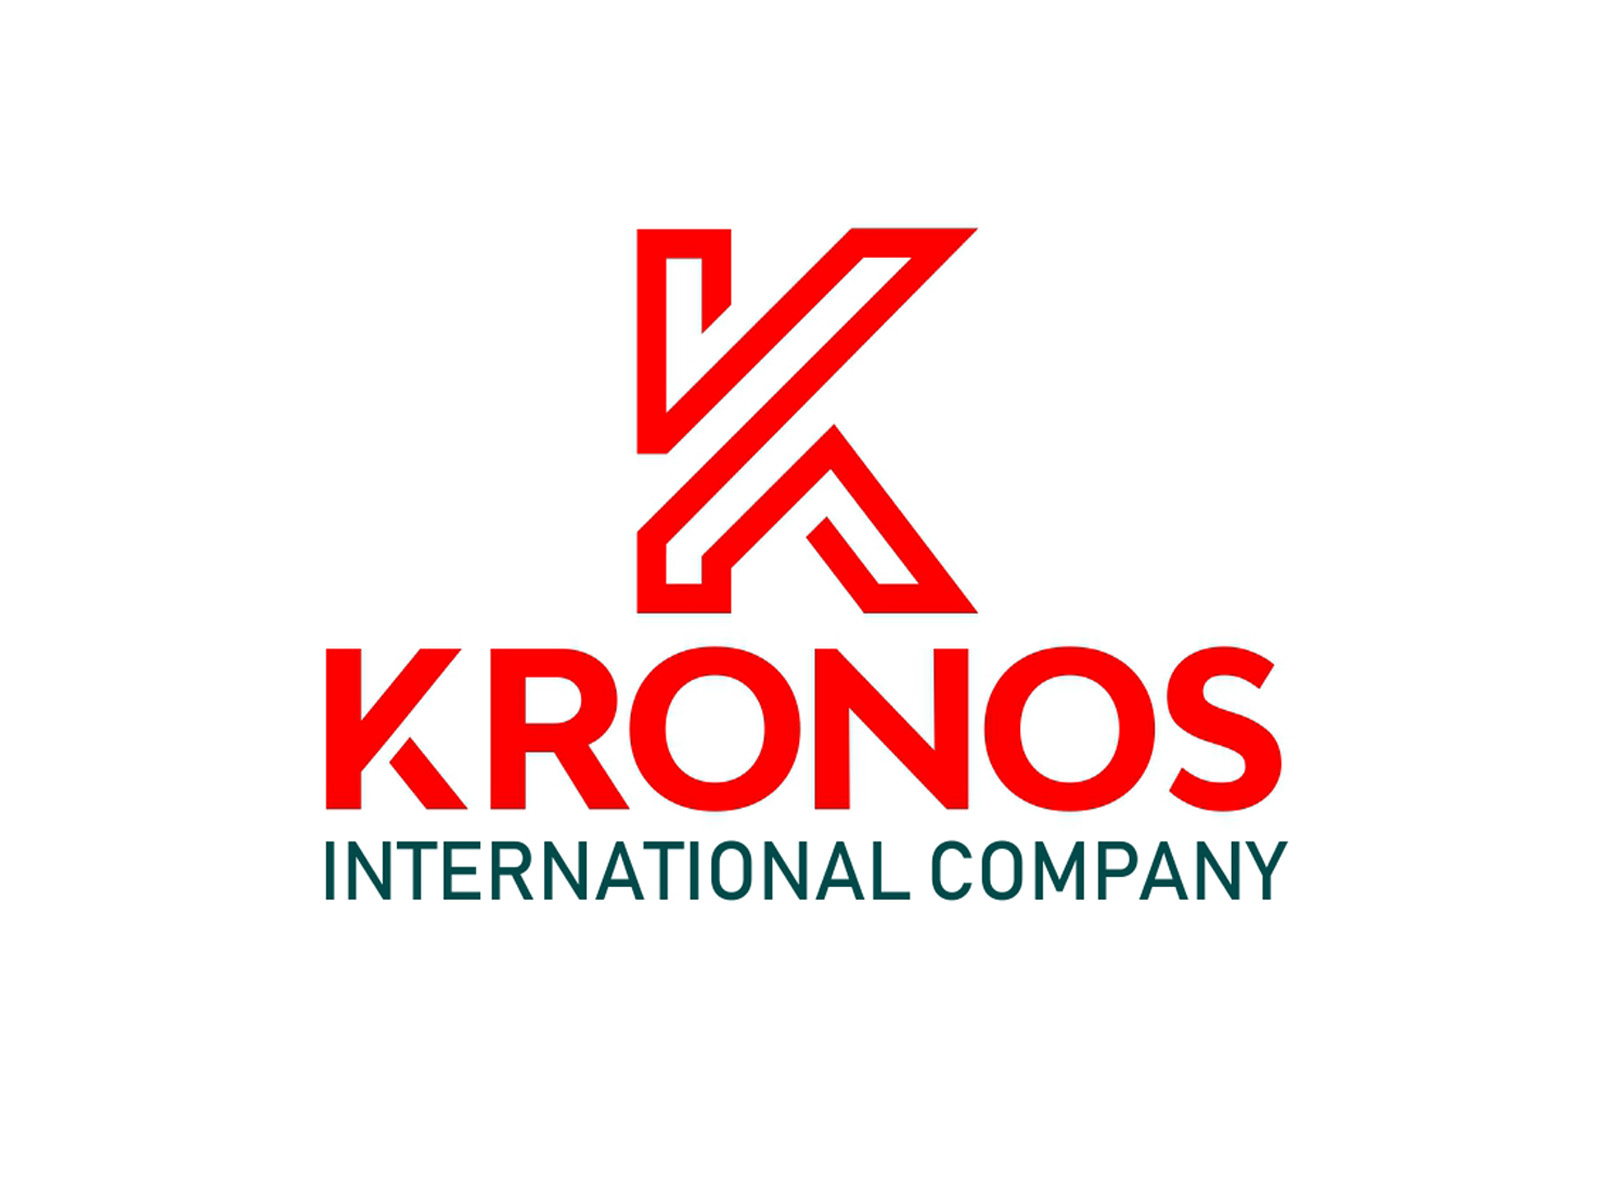 Logo Kronos by Carlos Veramendi on Dribbble